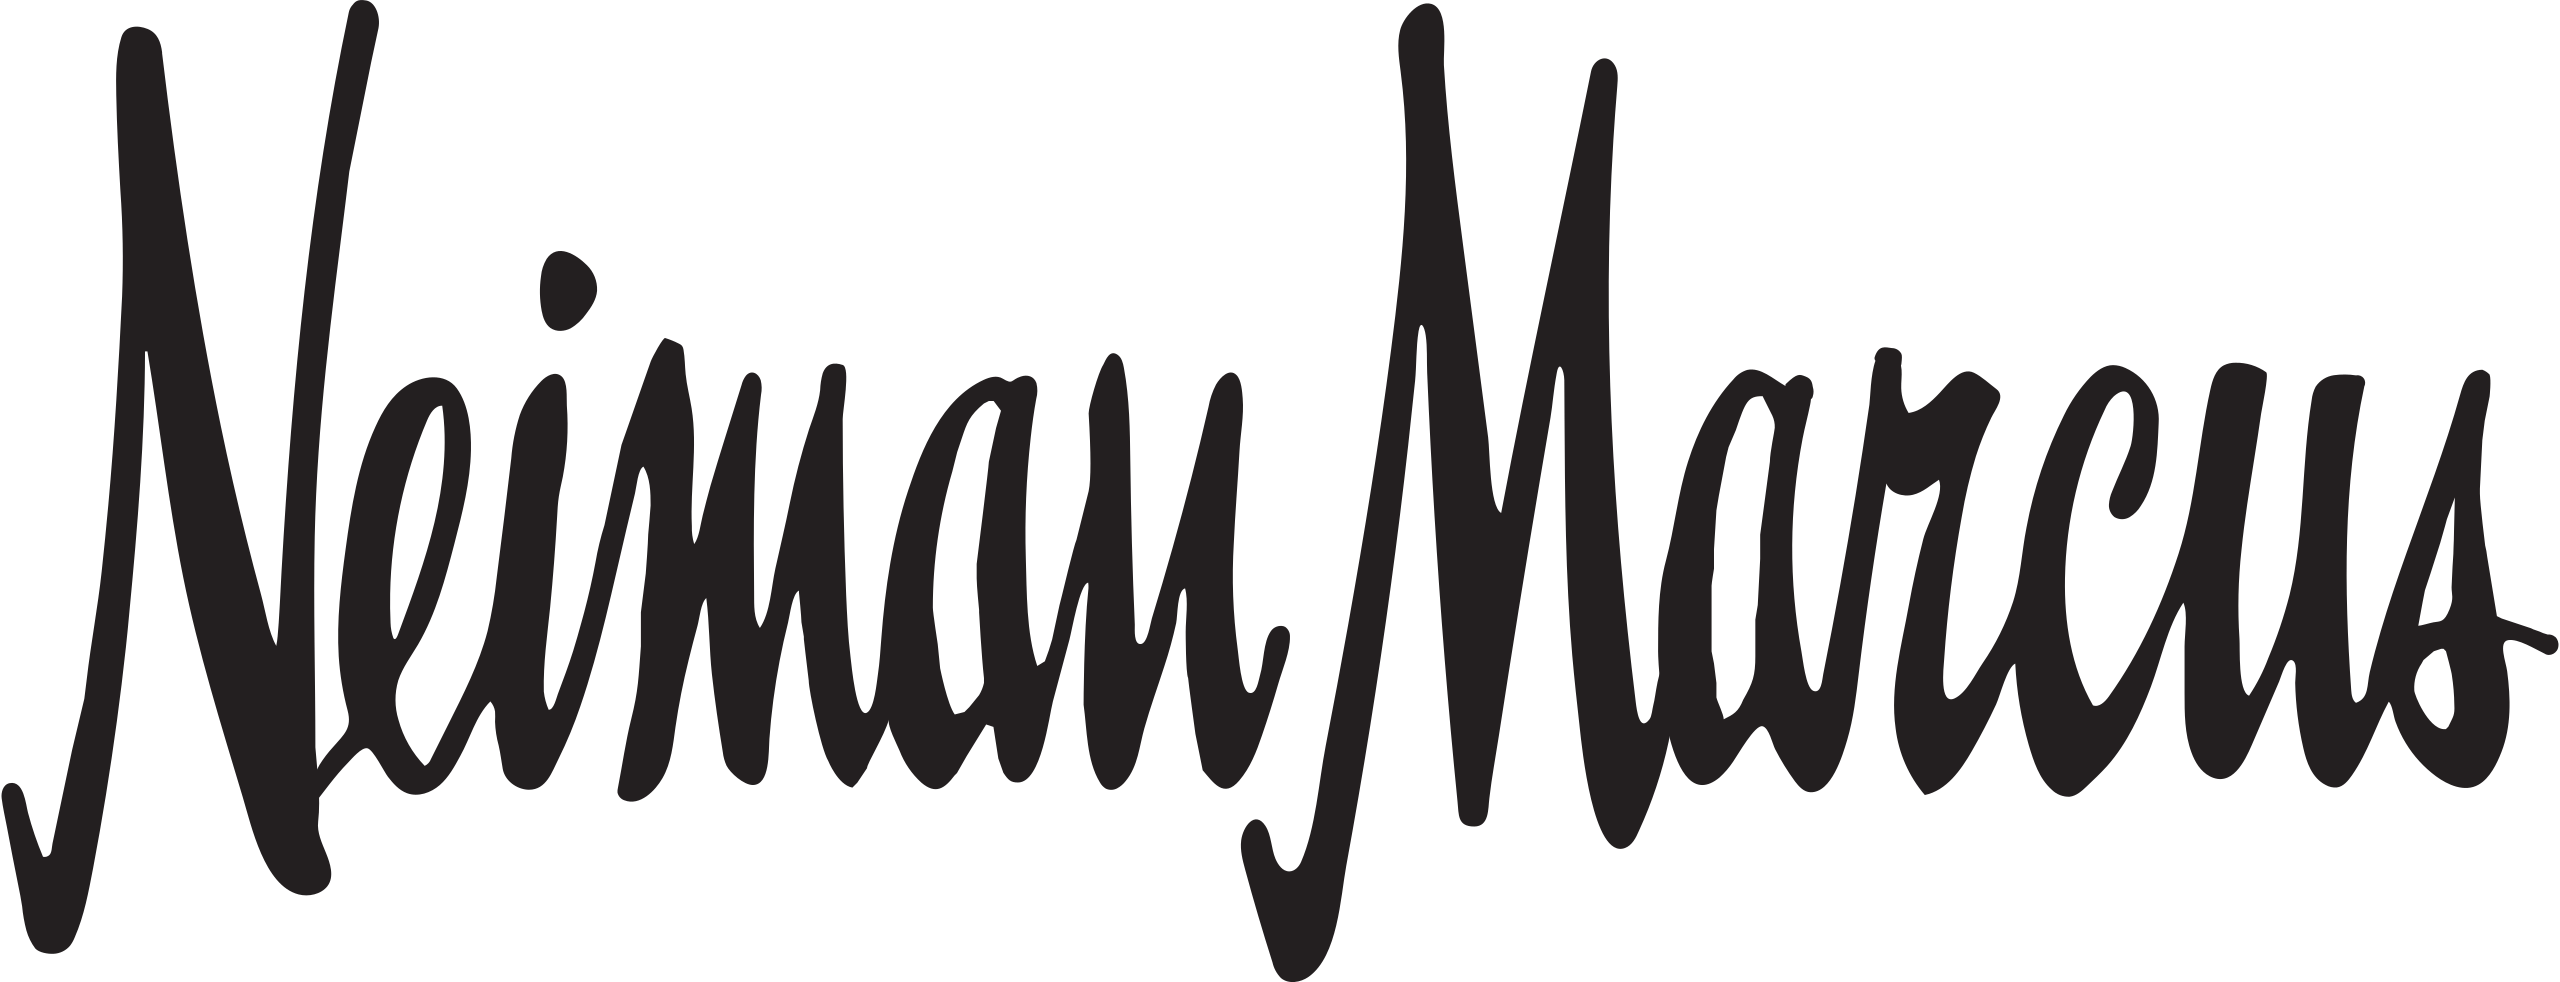 Neiman-Marcus-logo